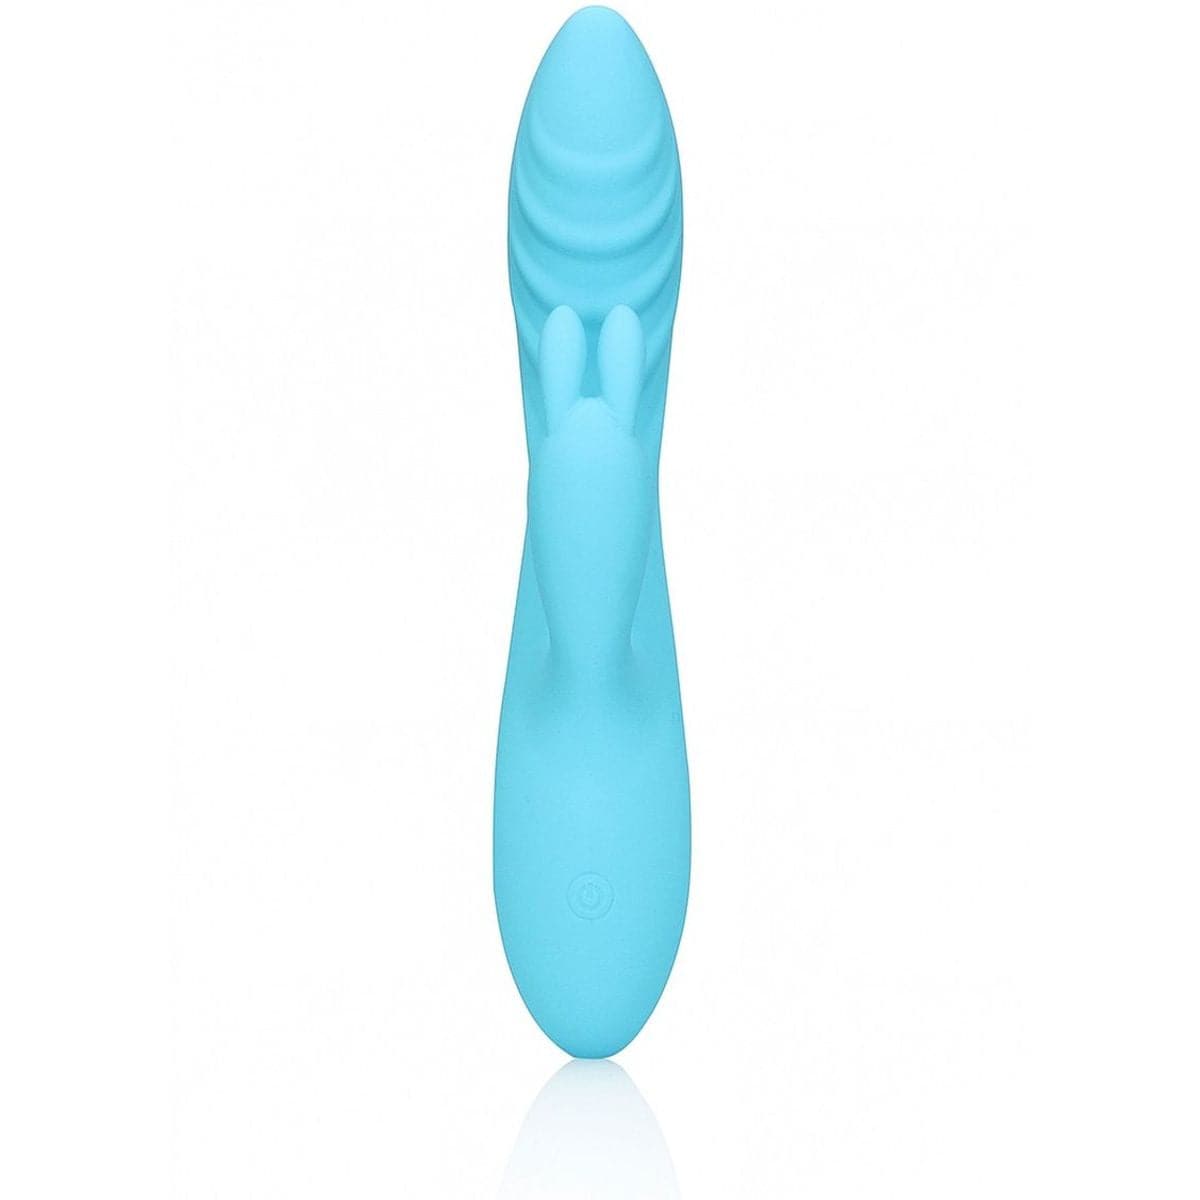 LOVELINE Smooth Silicone Rabbit Azul, 21cm Ø3.5cm, 10vibrações